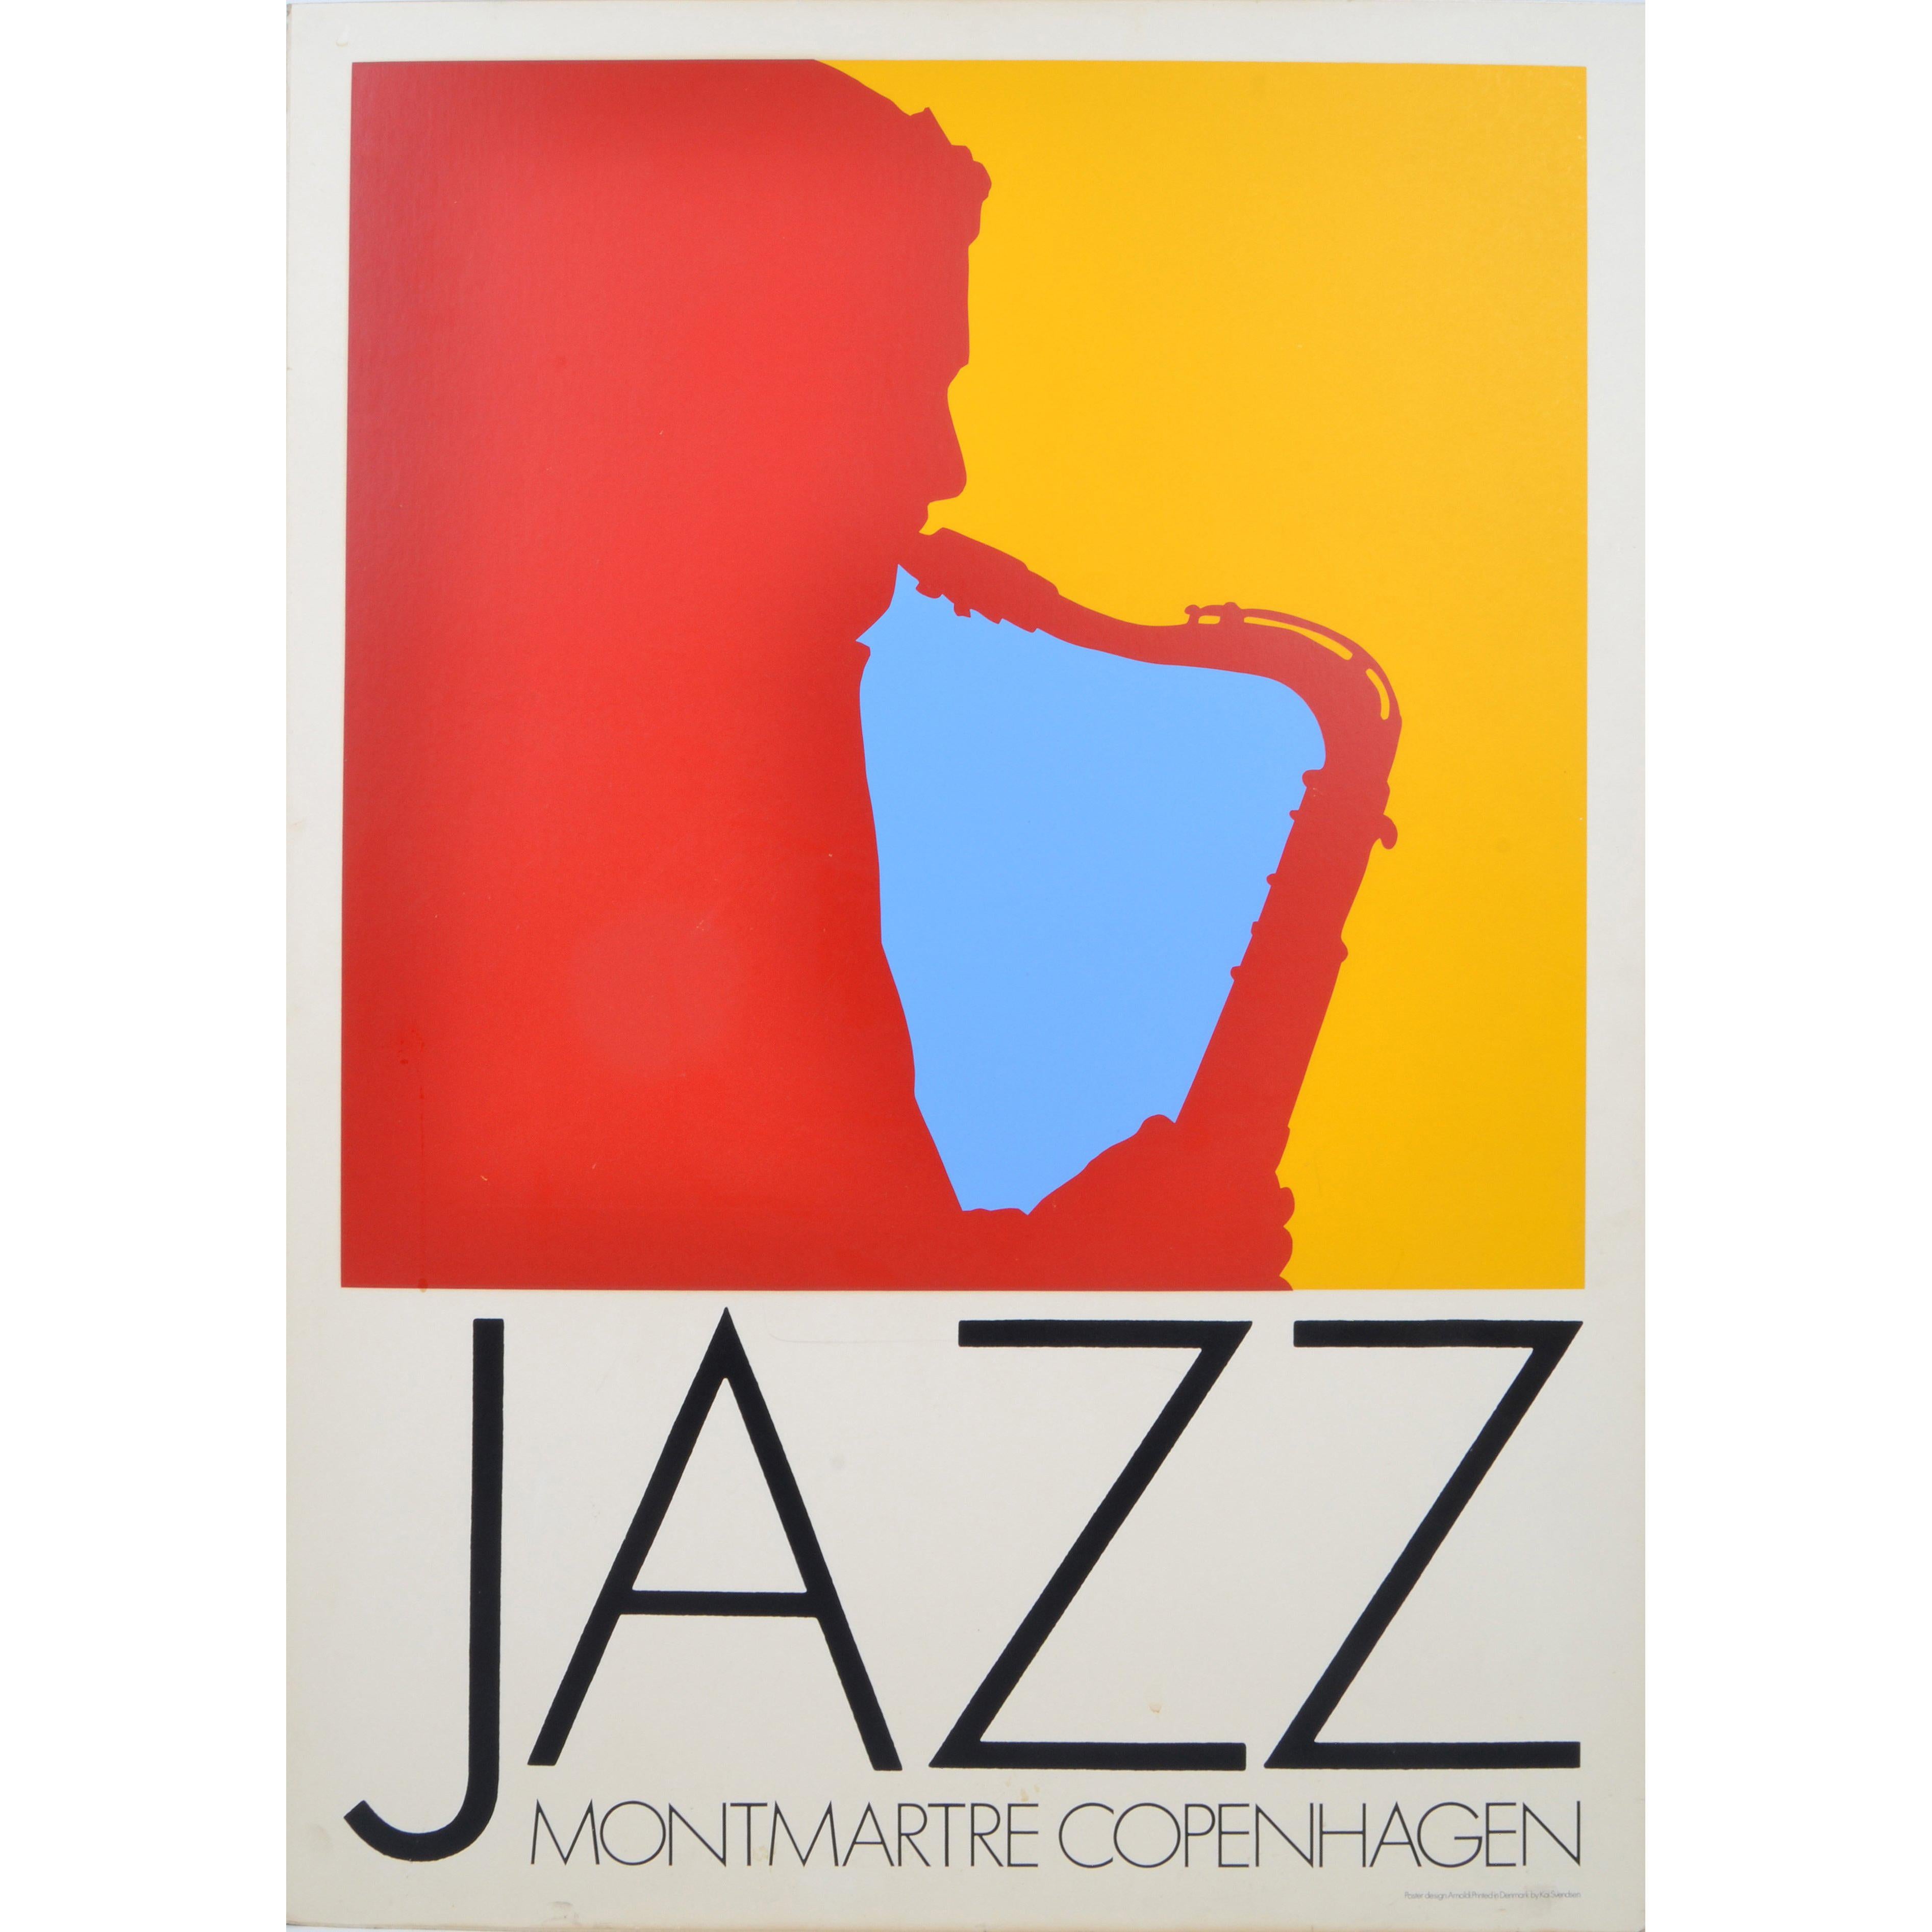 Vintage Print Copenhagen Jazz Montmartre by Per Arnoldi